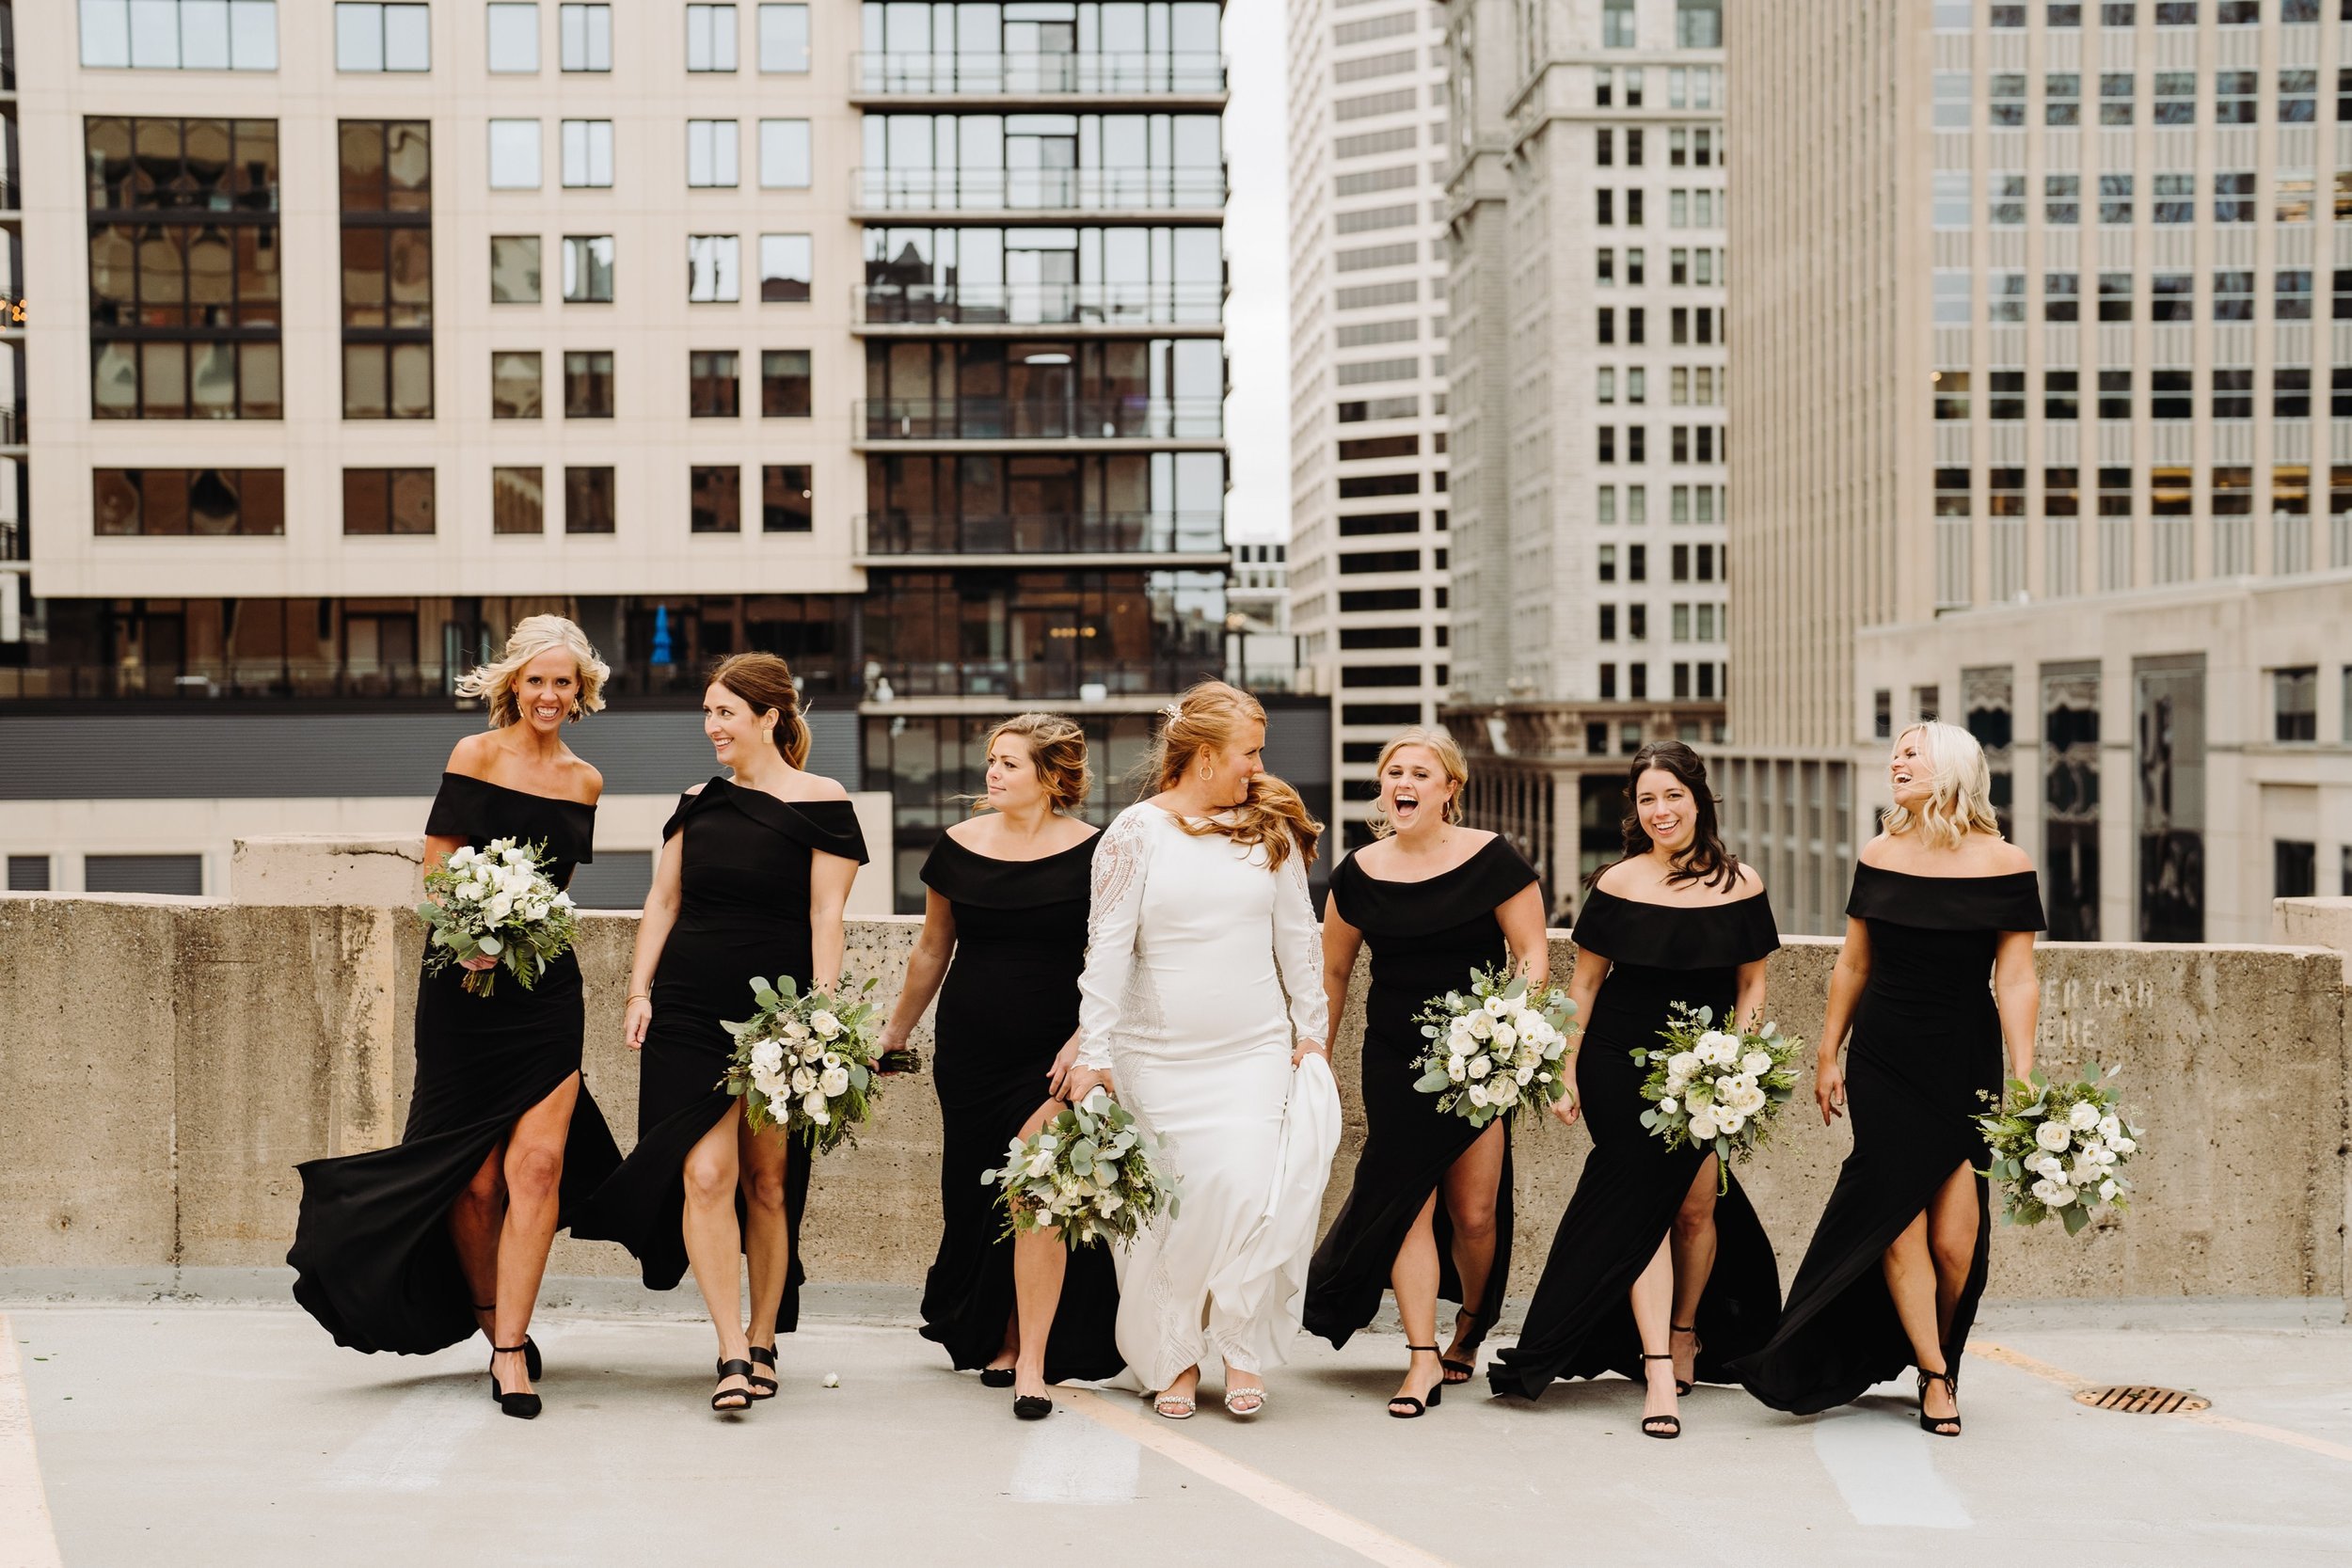 059_Black bridesmaid dresses for a November wedding in Minneapolis, Minnesota..jpg